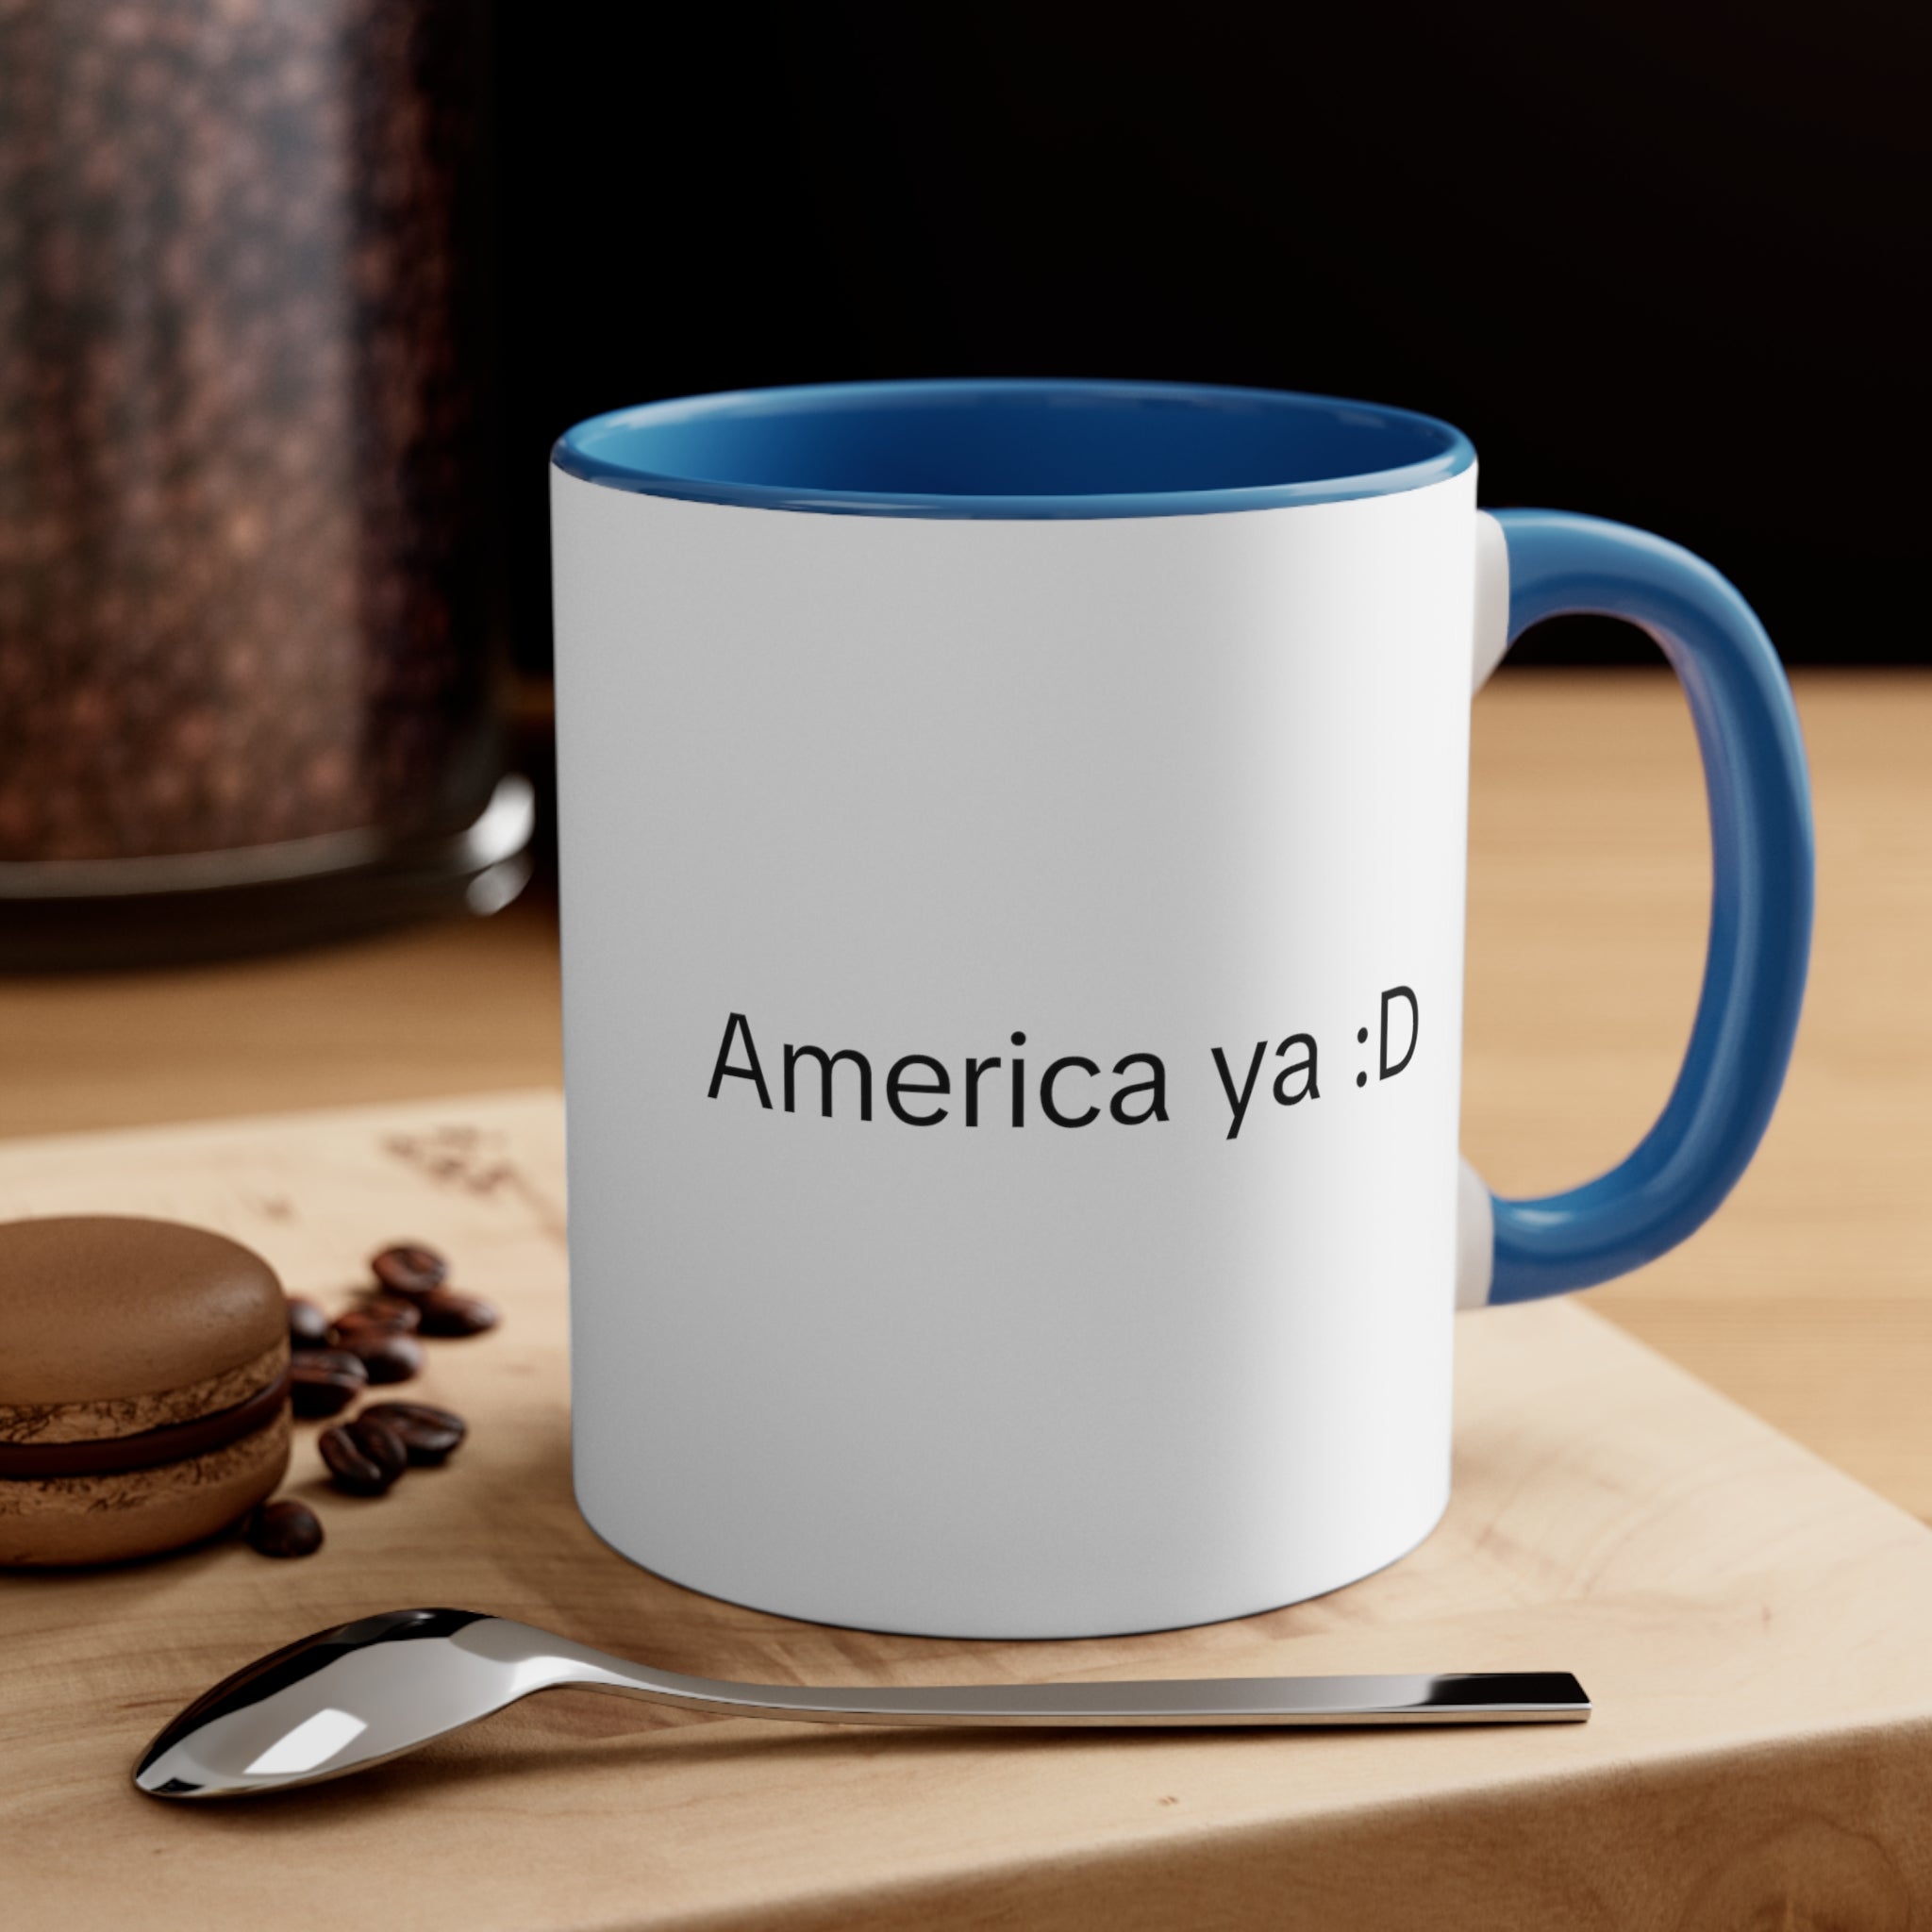 America Ya :D Meme Coffee Mug, 11oz HALLO! :D HALLO! :D HALLO! :D tiktok meme inspired funny humor humour Joke Comedy Viral Mug Cup